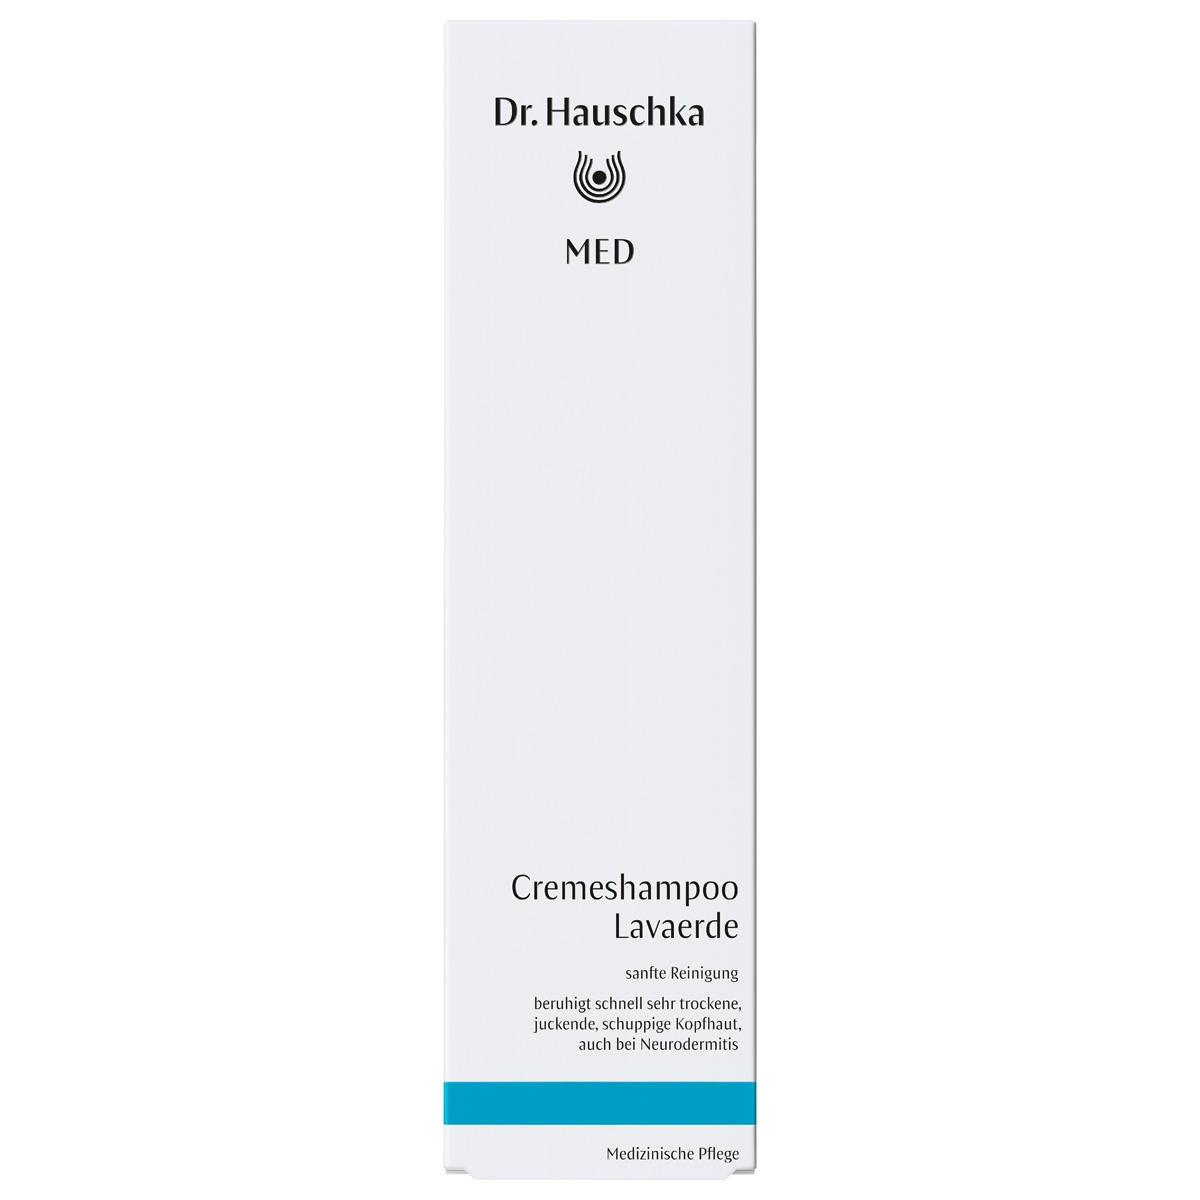 Dr. Hauschka Med Cremeshampoo Lavaerde 150 ml - 2